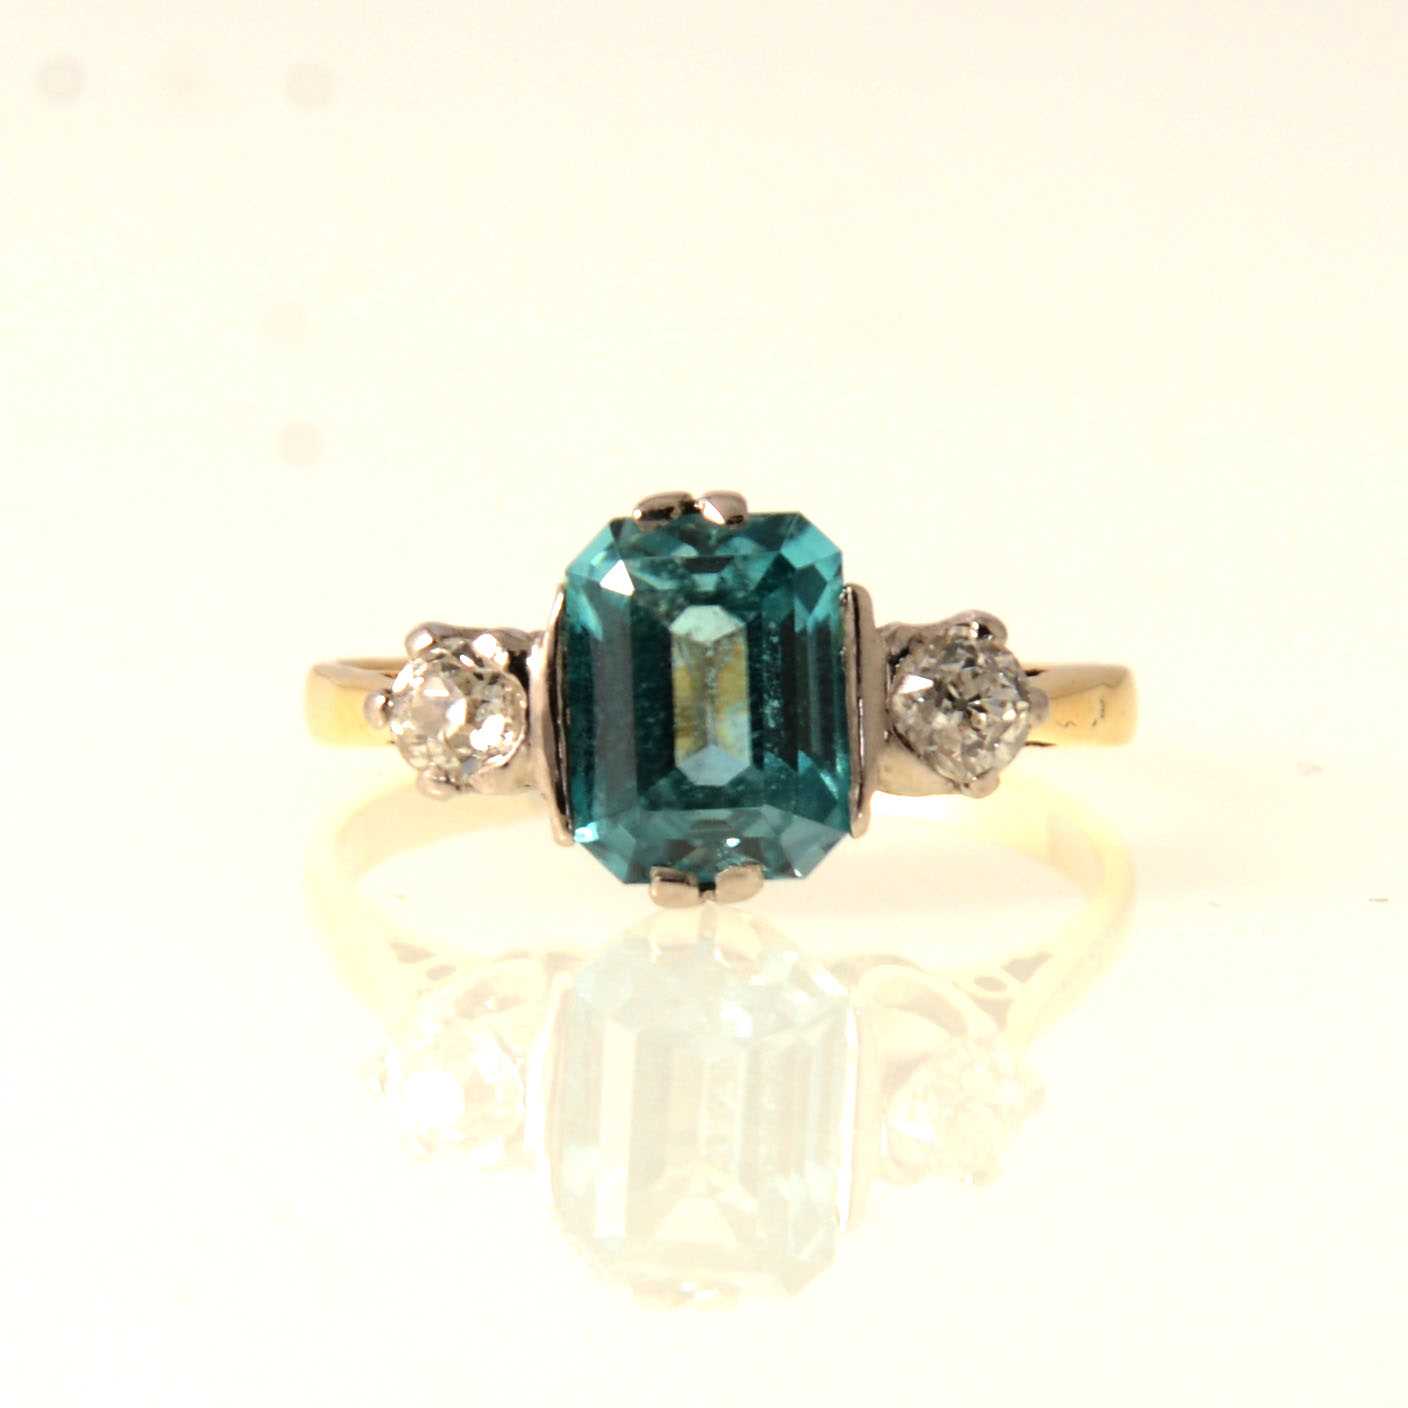 Lot 75 - A three stone ring with diamonds and aqua coloured stone.